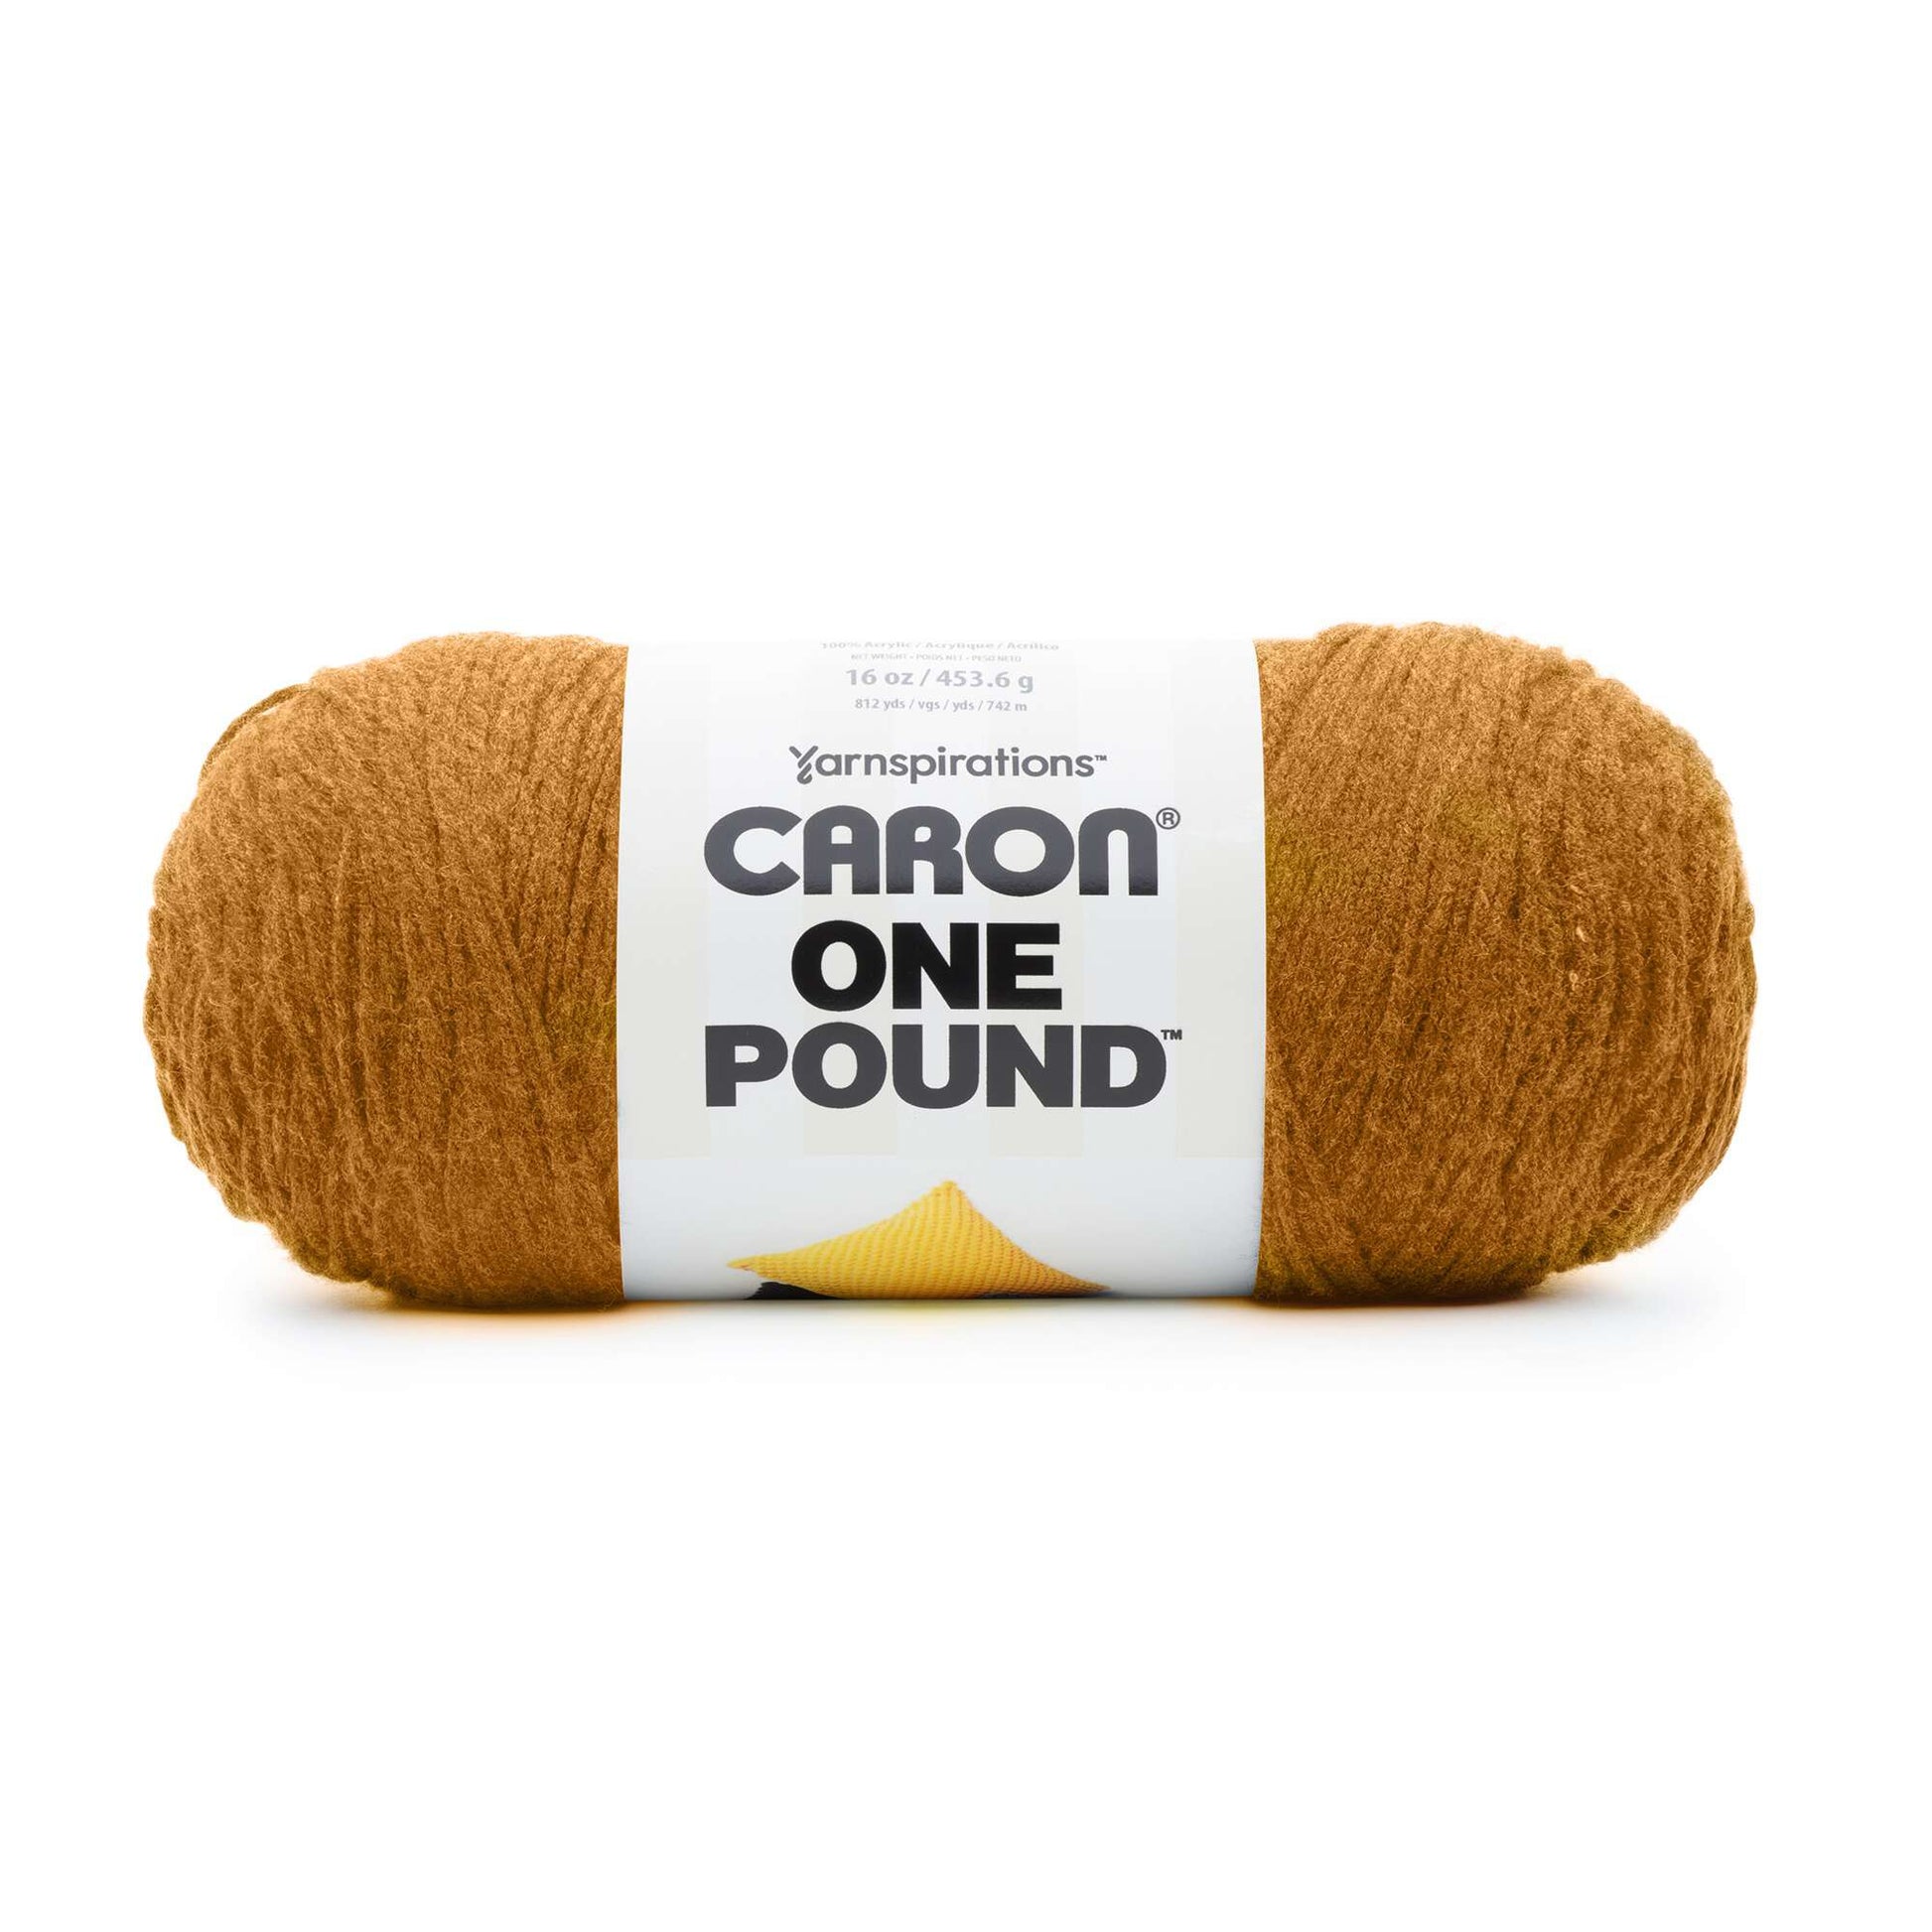 Caron One Pound Yarn - Discontinued Shades